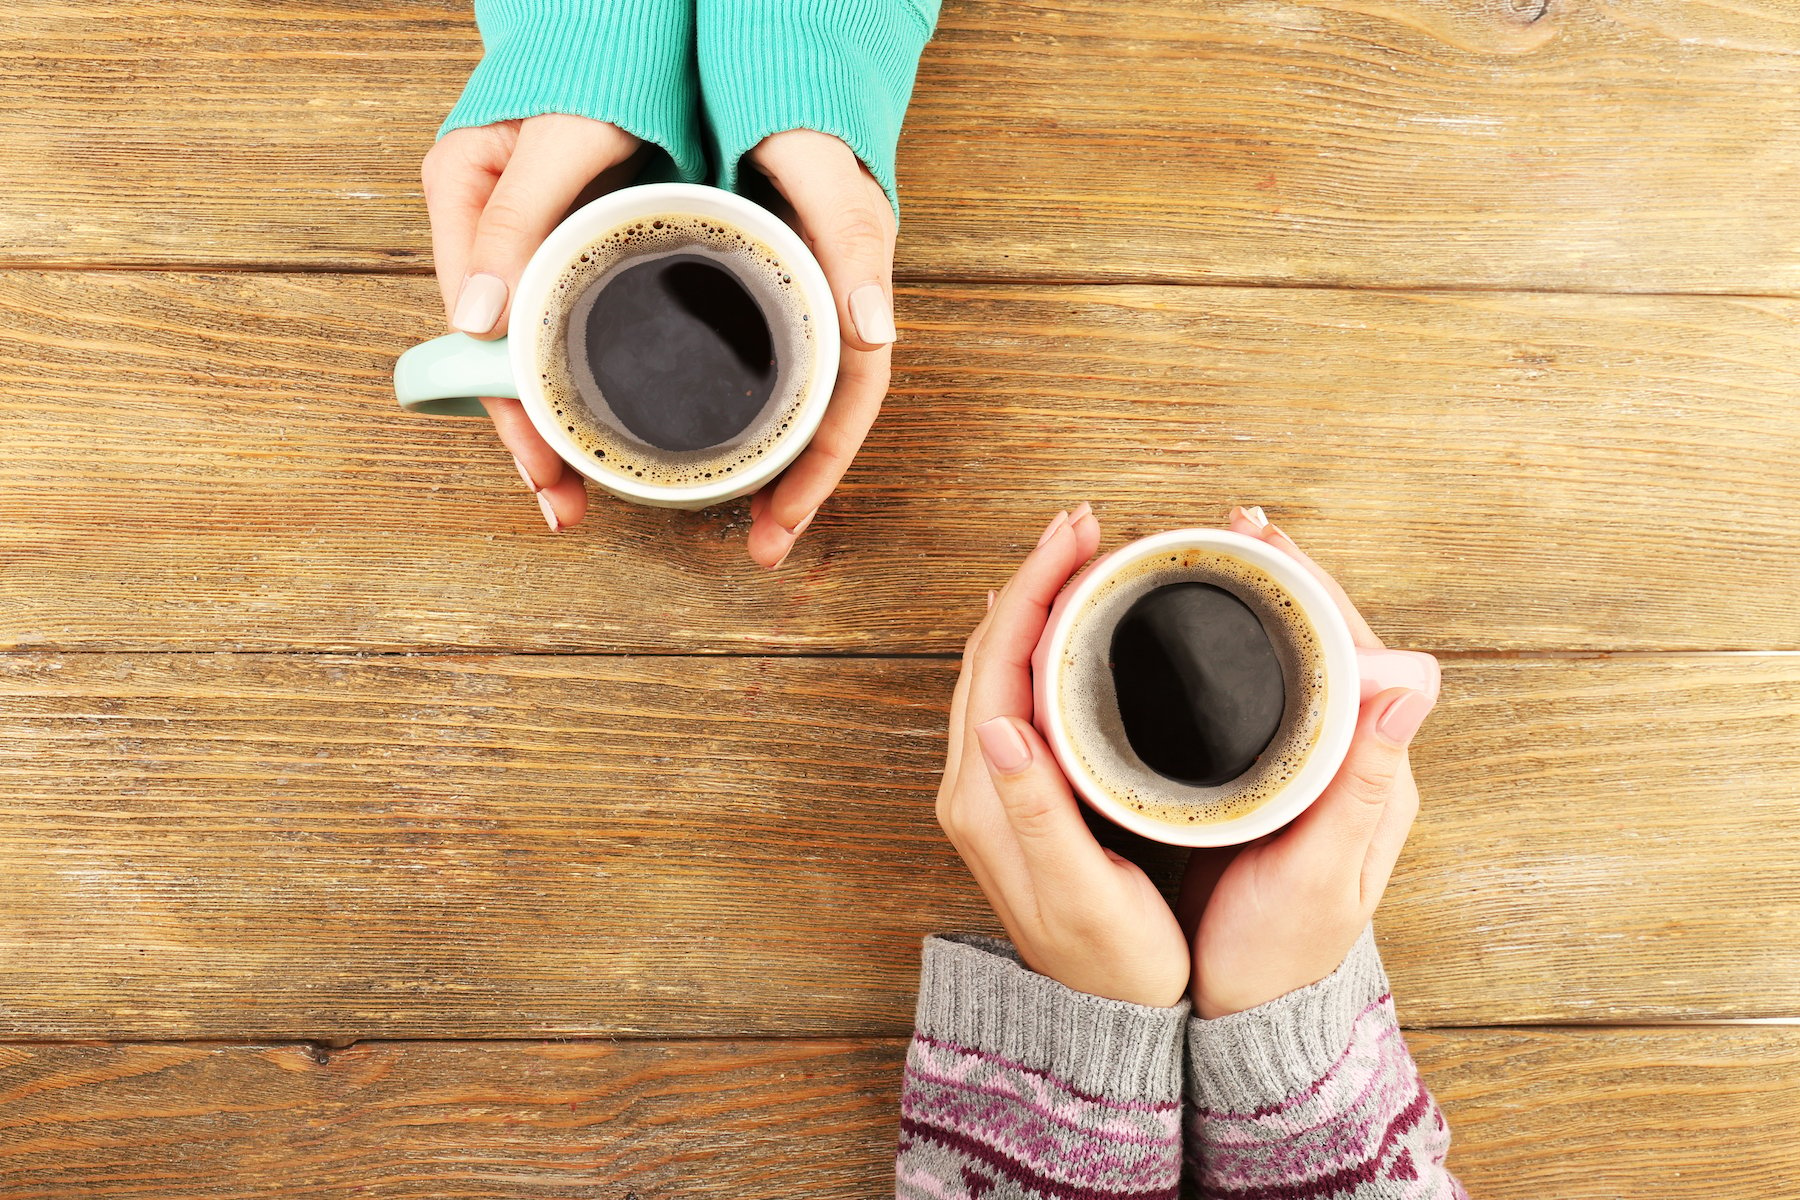 Does coffee raise blood sugar?